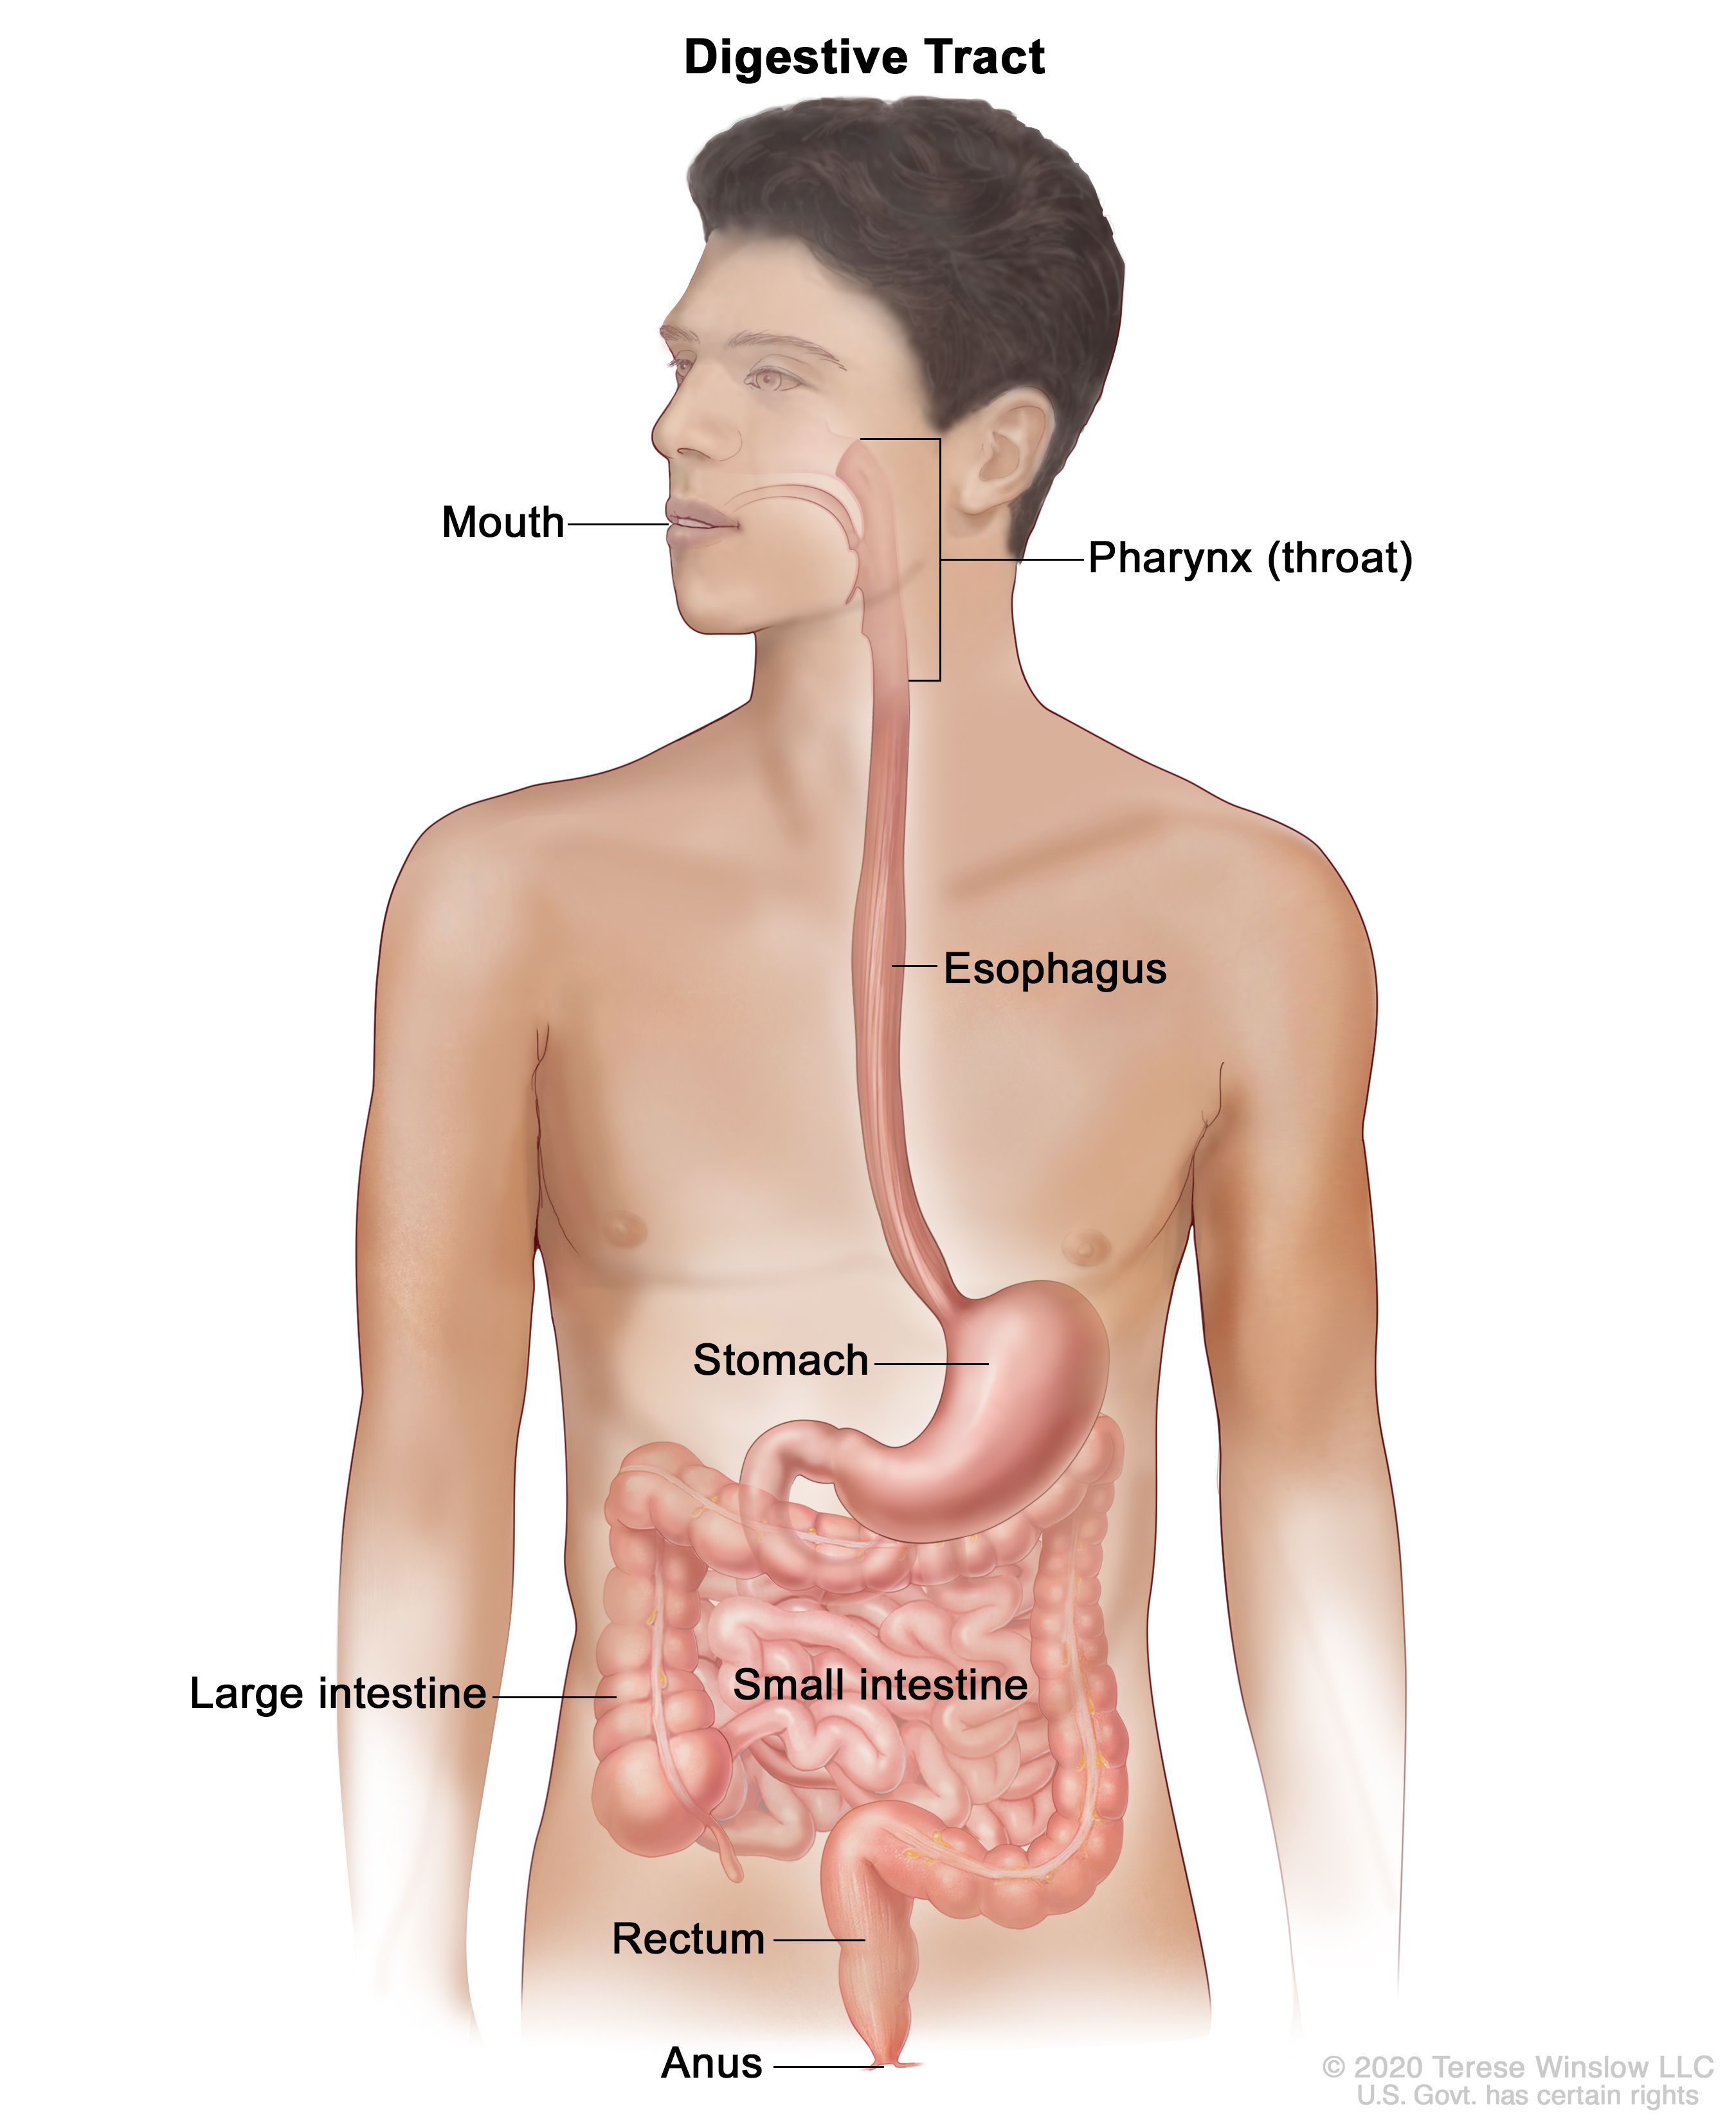 消化管の解剖図：図は、口腔、咽頭（喉）、食道、胃、小腸、大腸、直腸、肛門を示す。